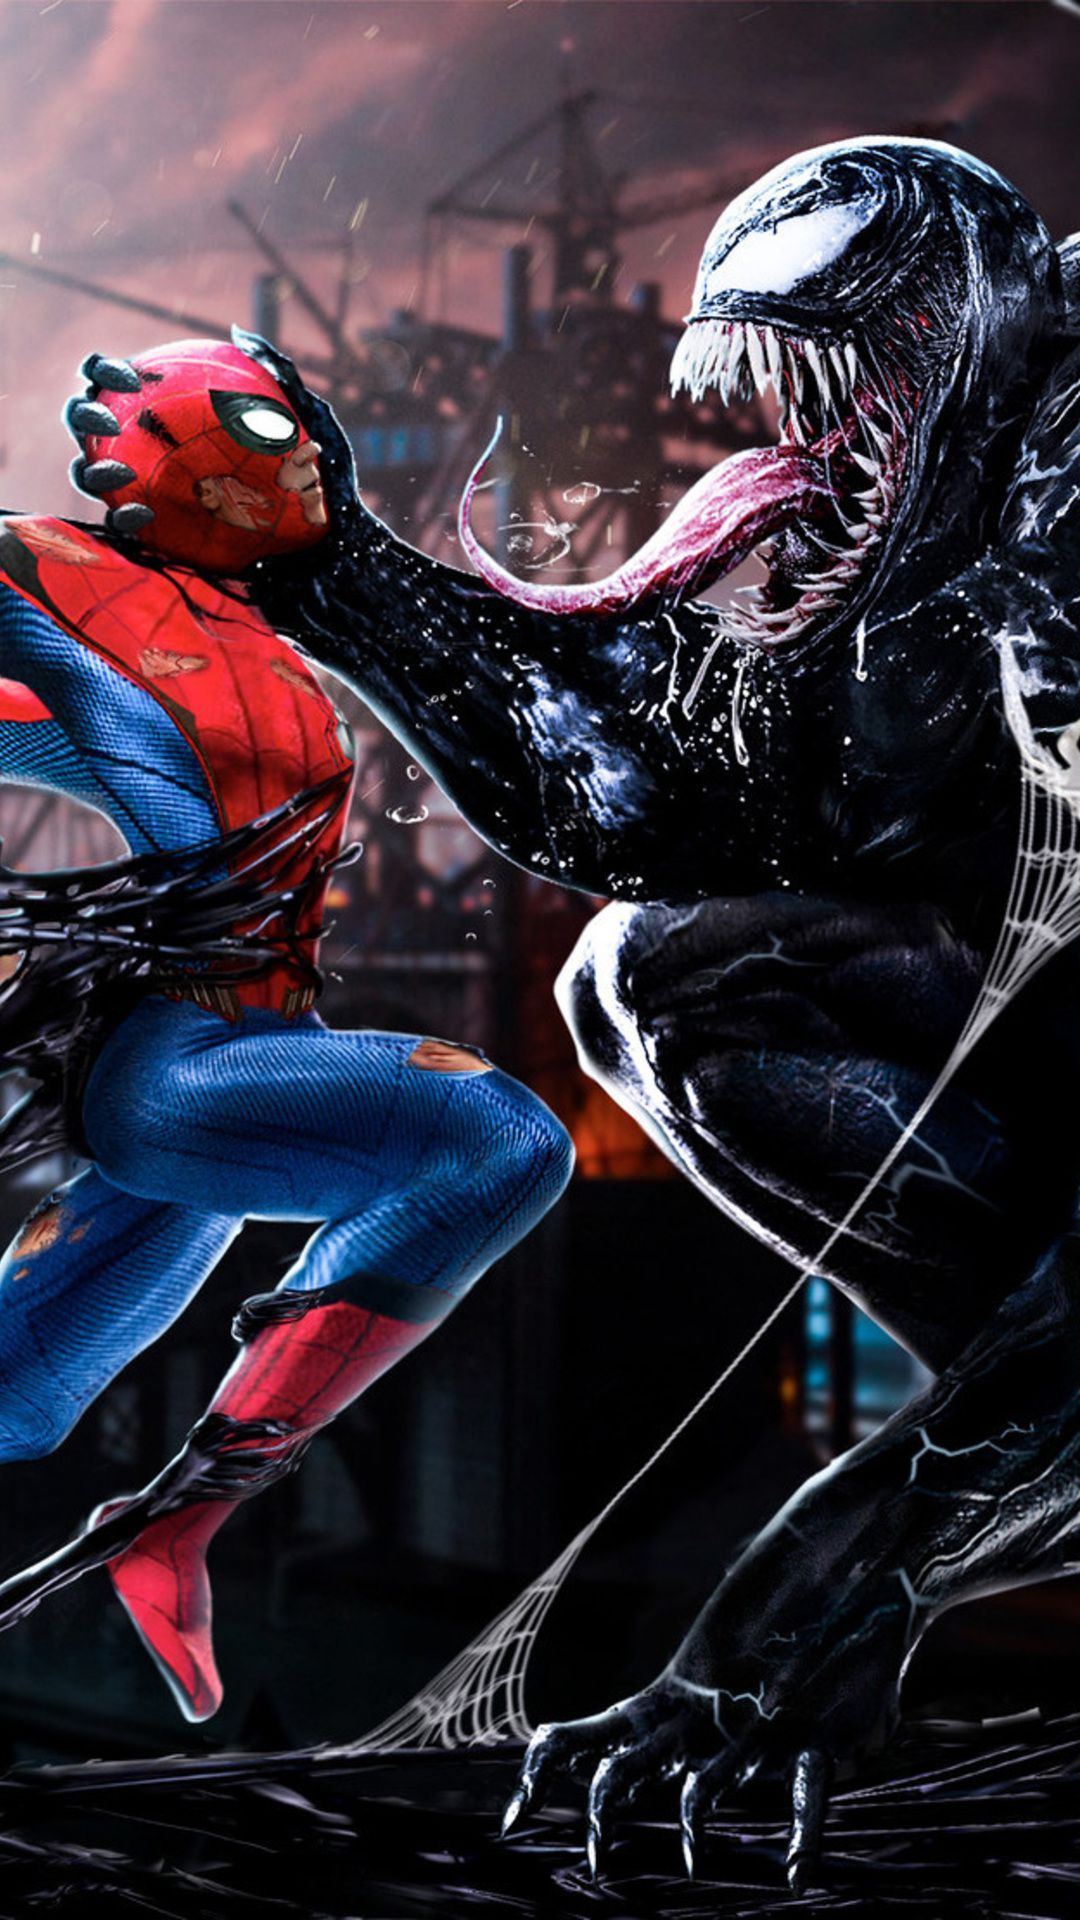 1080x1920 Spider-Man v Venom | Avengers wallpaper, Spiderman, Marvel comics wallpaper